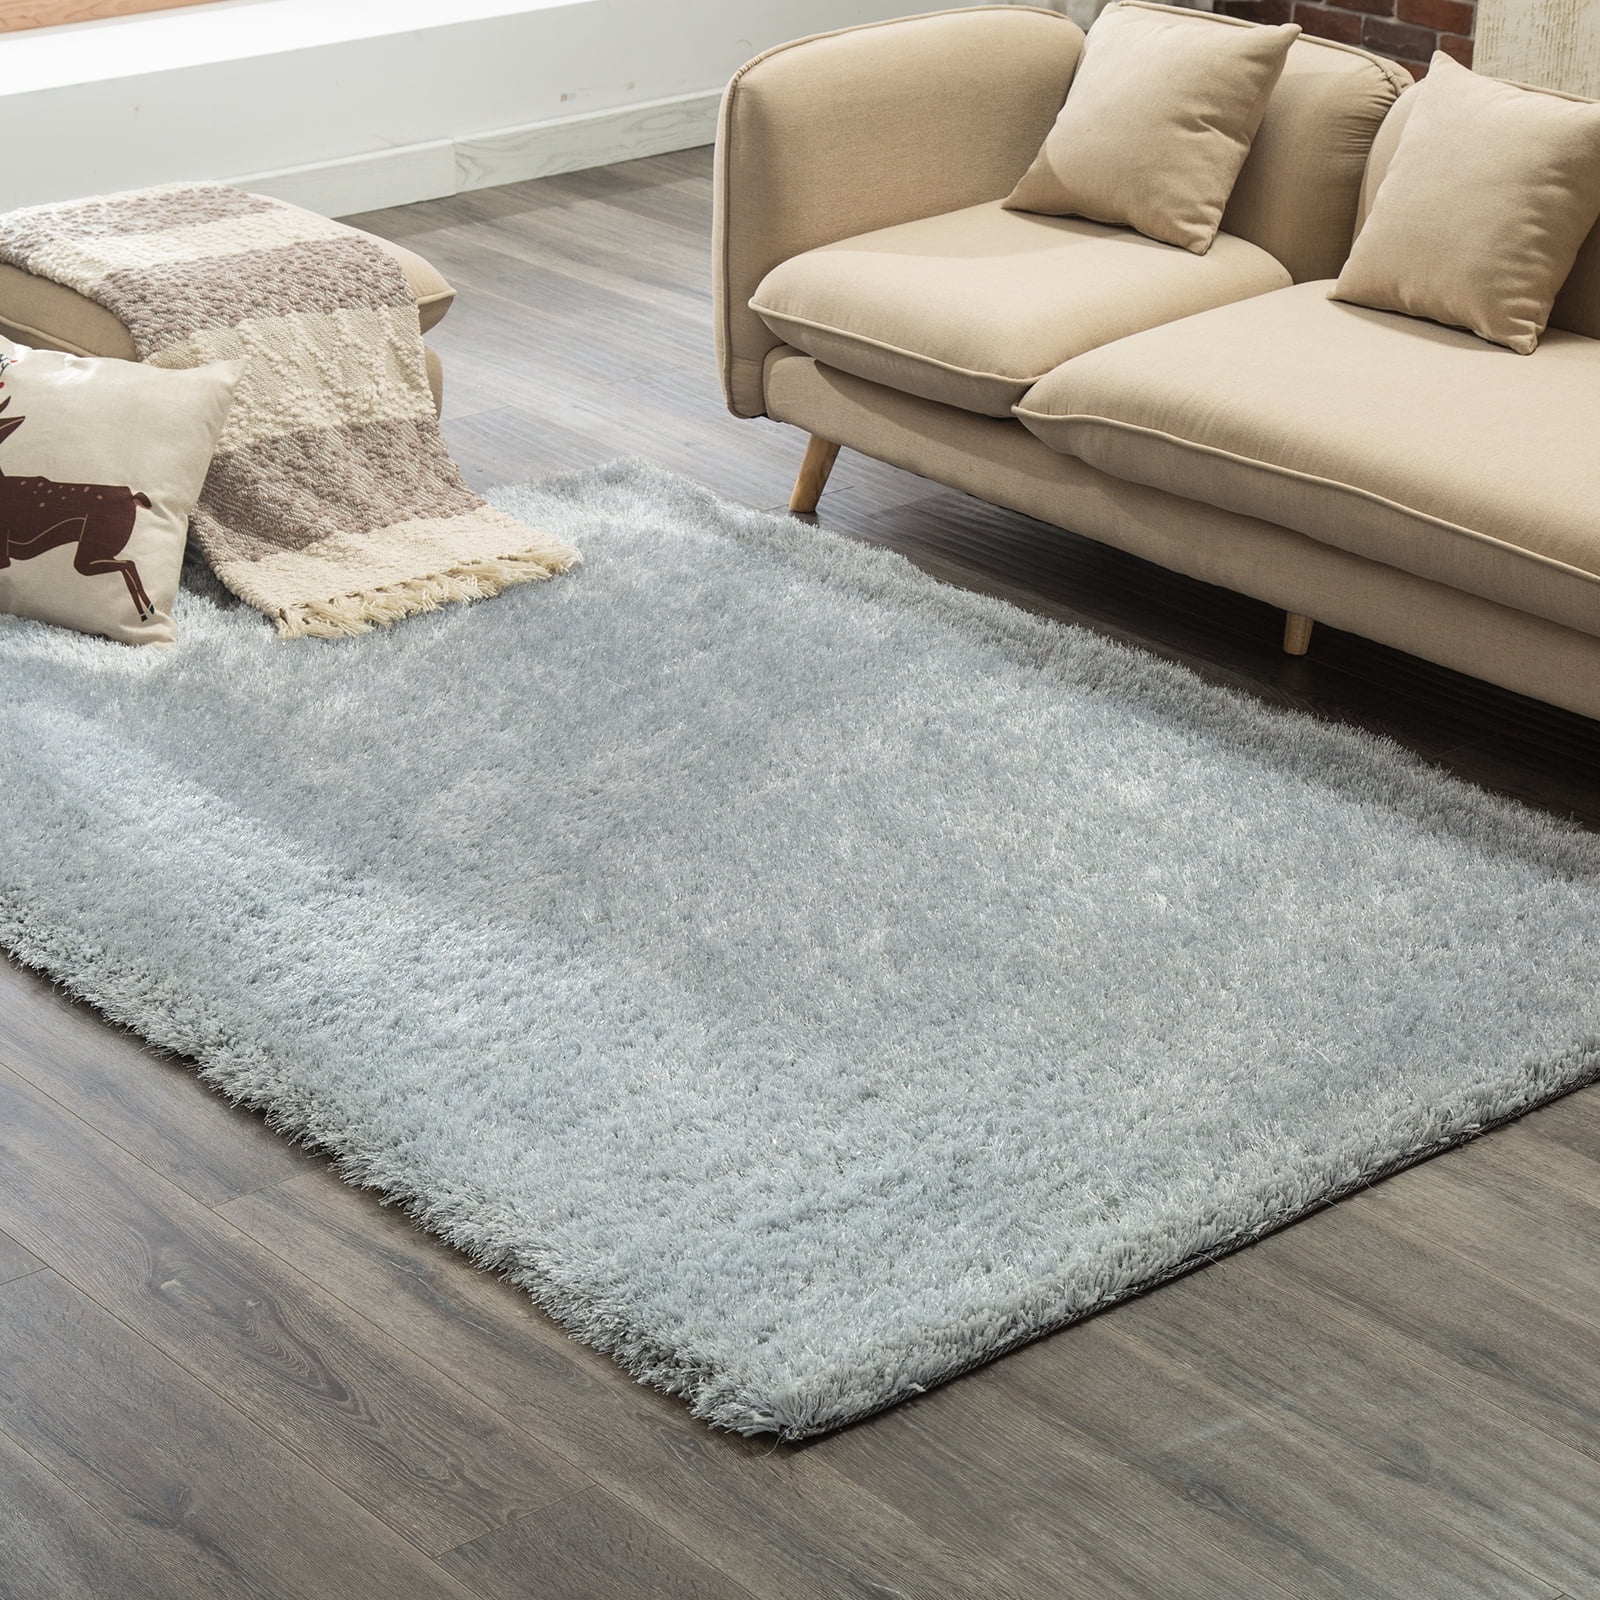 Rugs Carpets for living room bedroom Mecor Gray Walmart